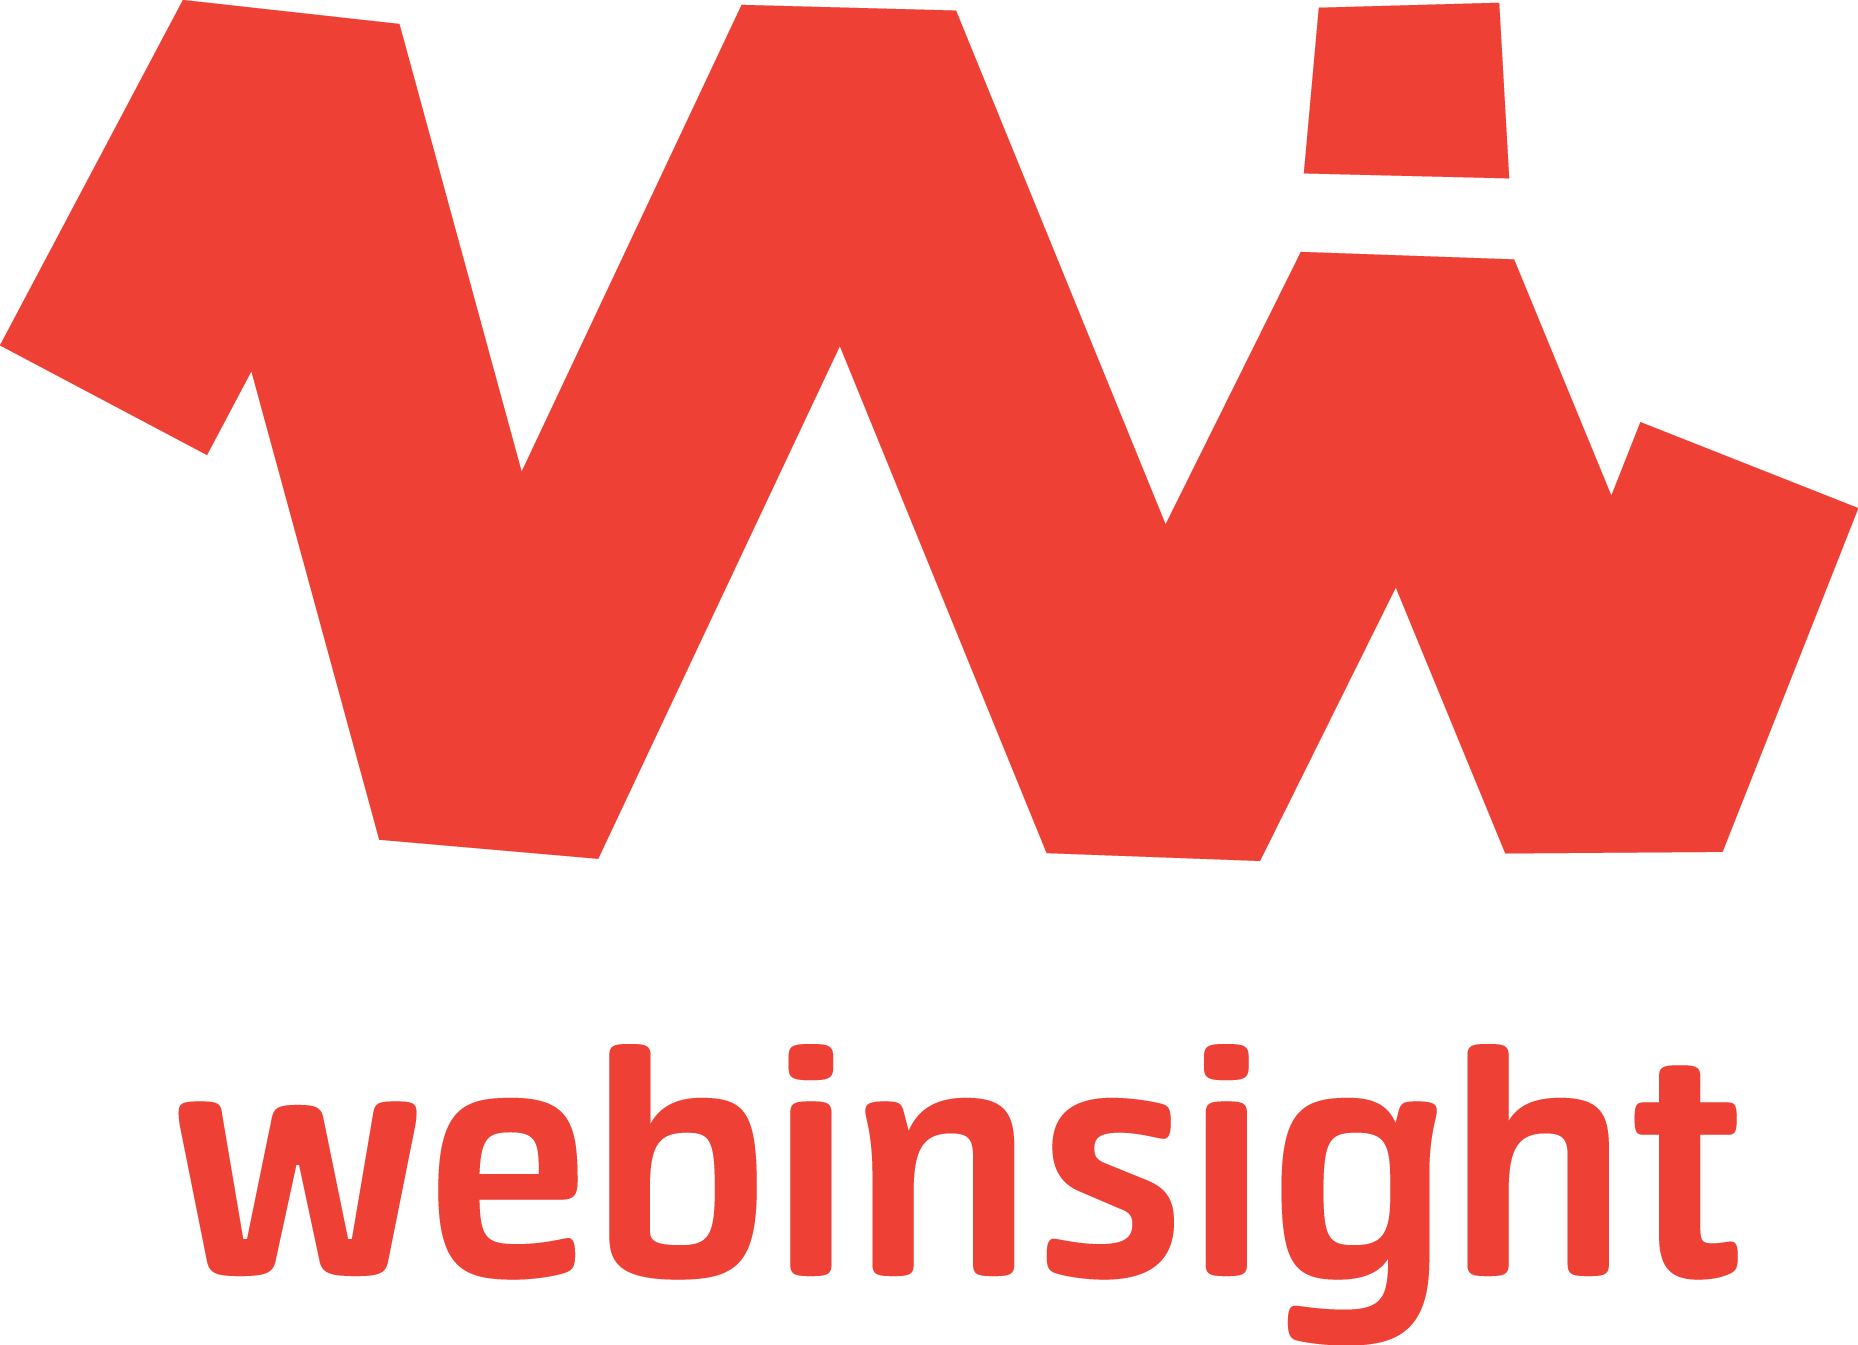 Webinsight